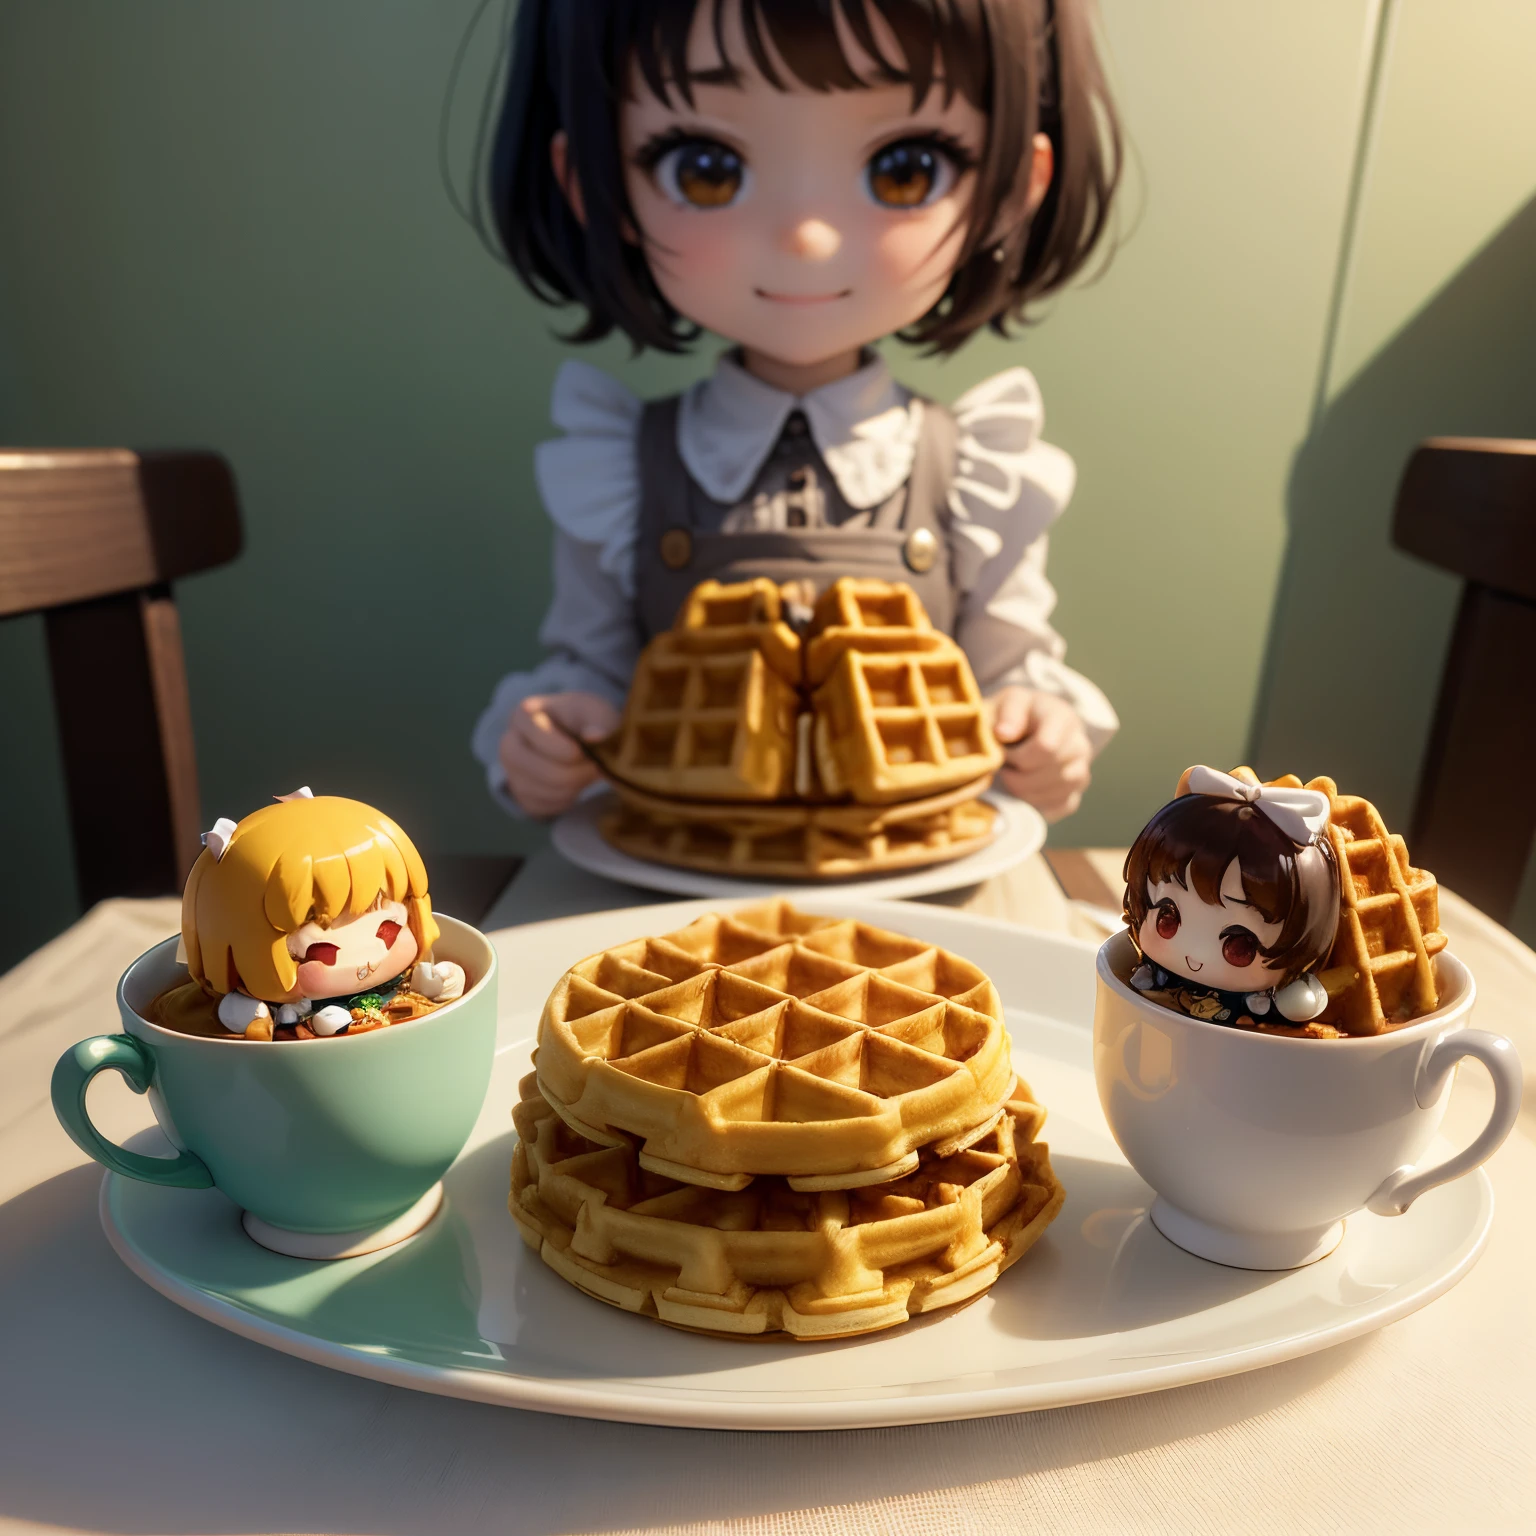 anime girl eating a WAFFLE by EllaSamaSanChan on DeviantArt